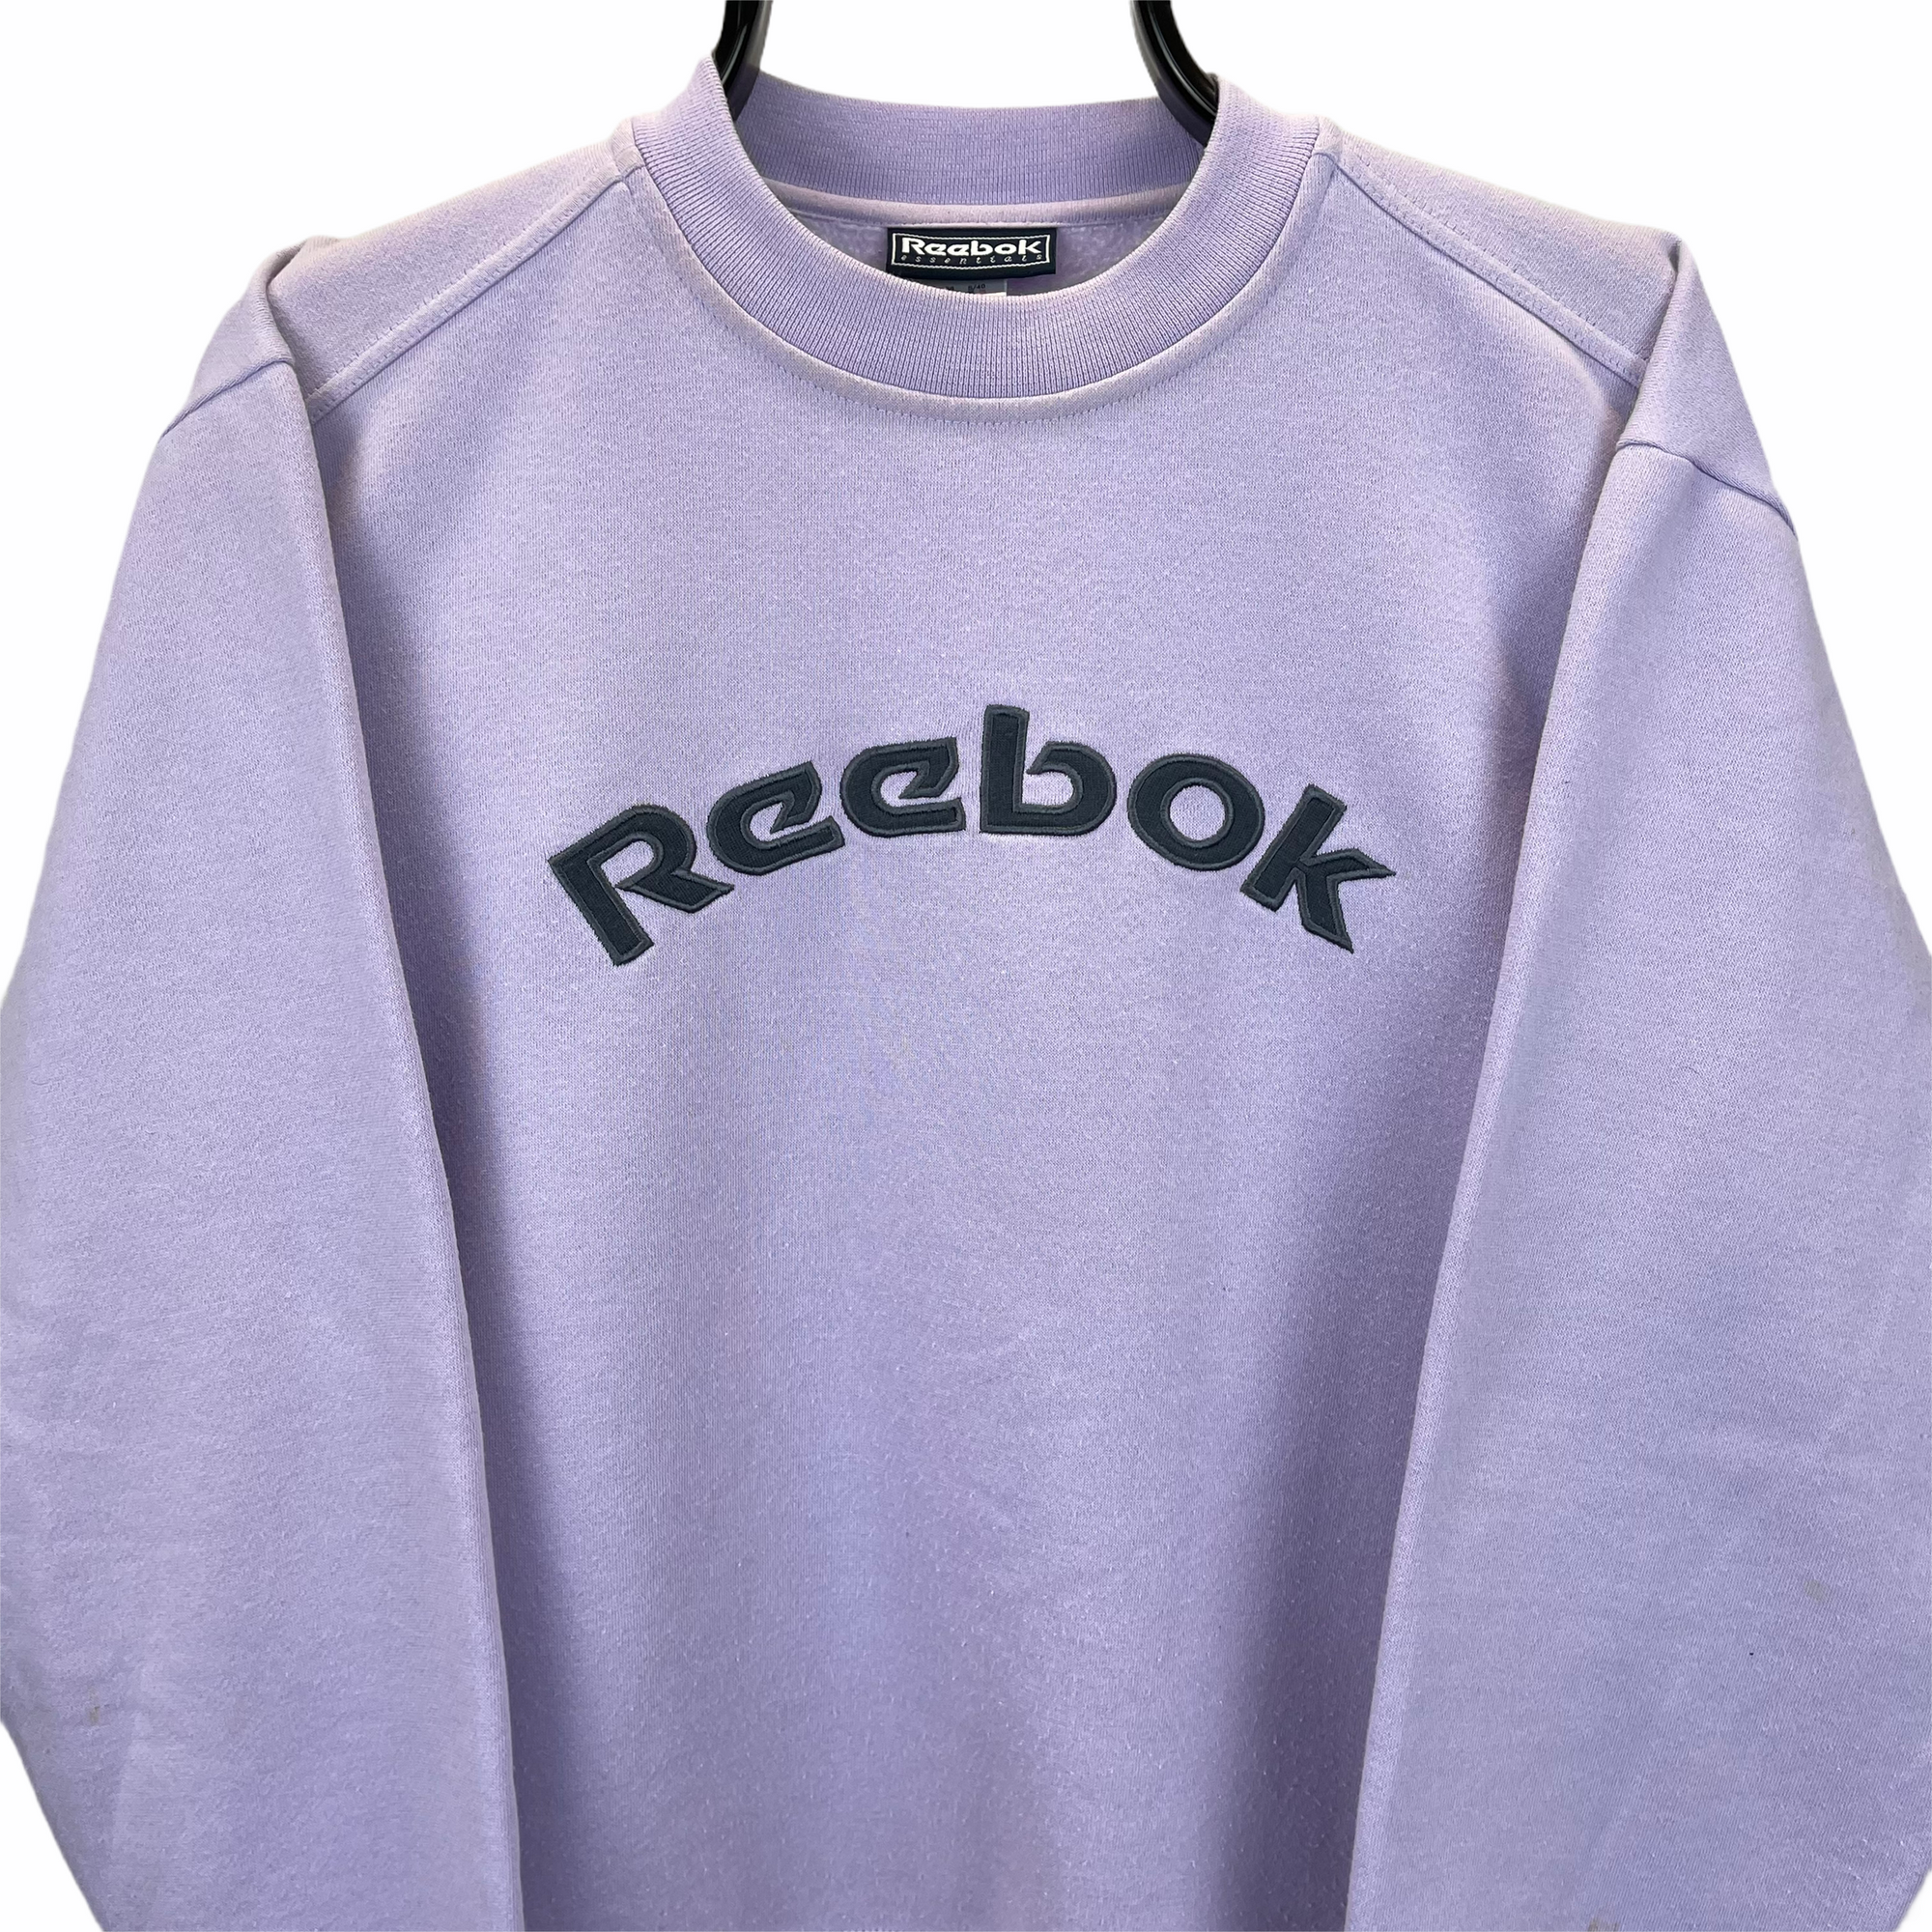 Vintage 90s Reebok Spellout Sweatshirt in Lilac - Men's Small/Women's Medium